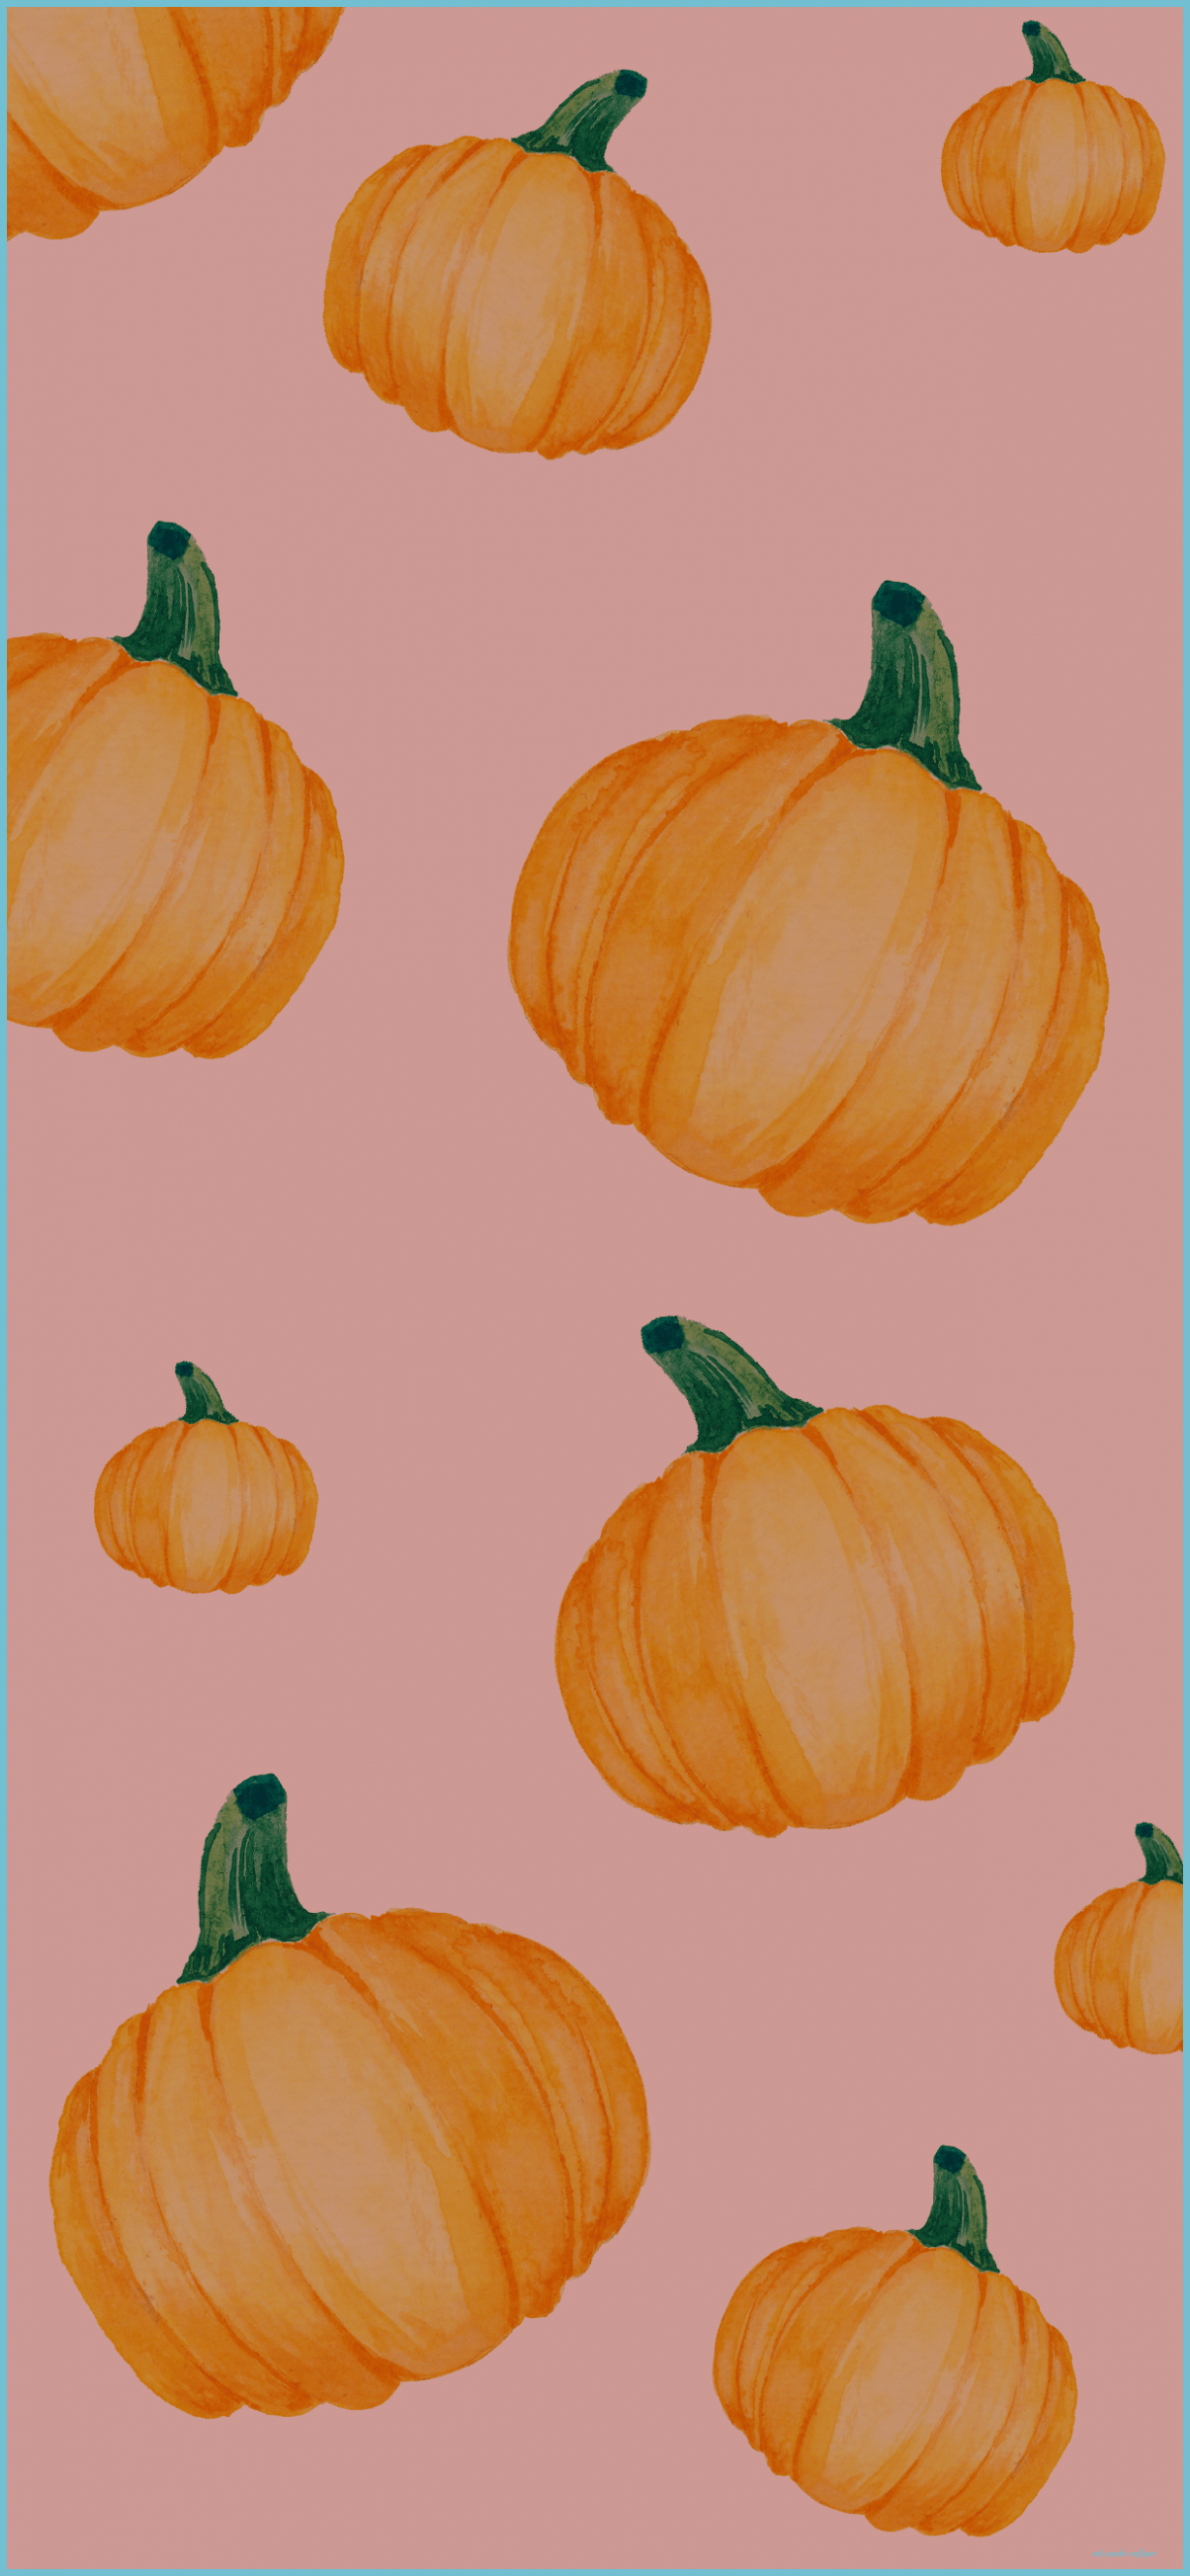 An image of a pattern of pumpkins on a pink background. - Fall, cute fall, pumpkin